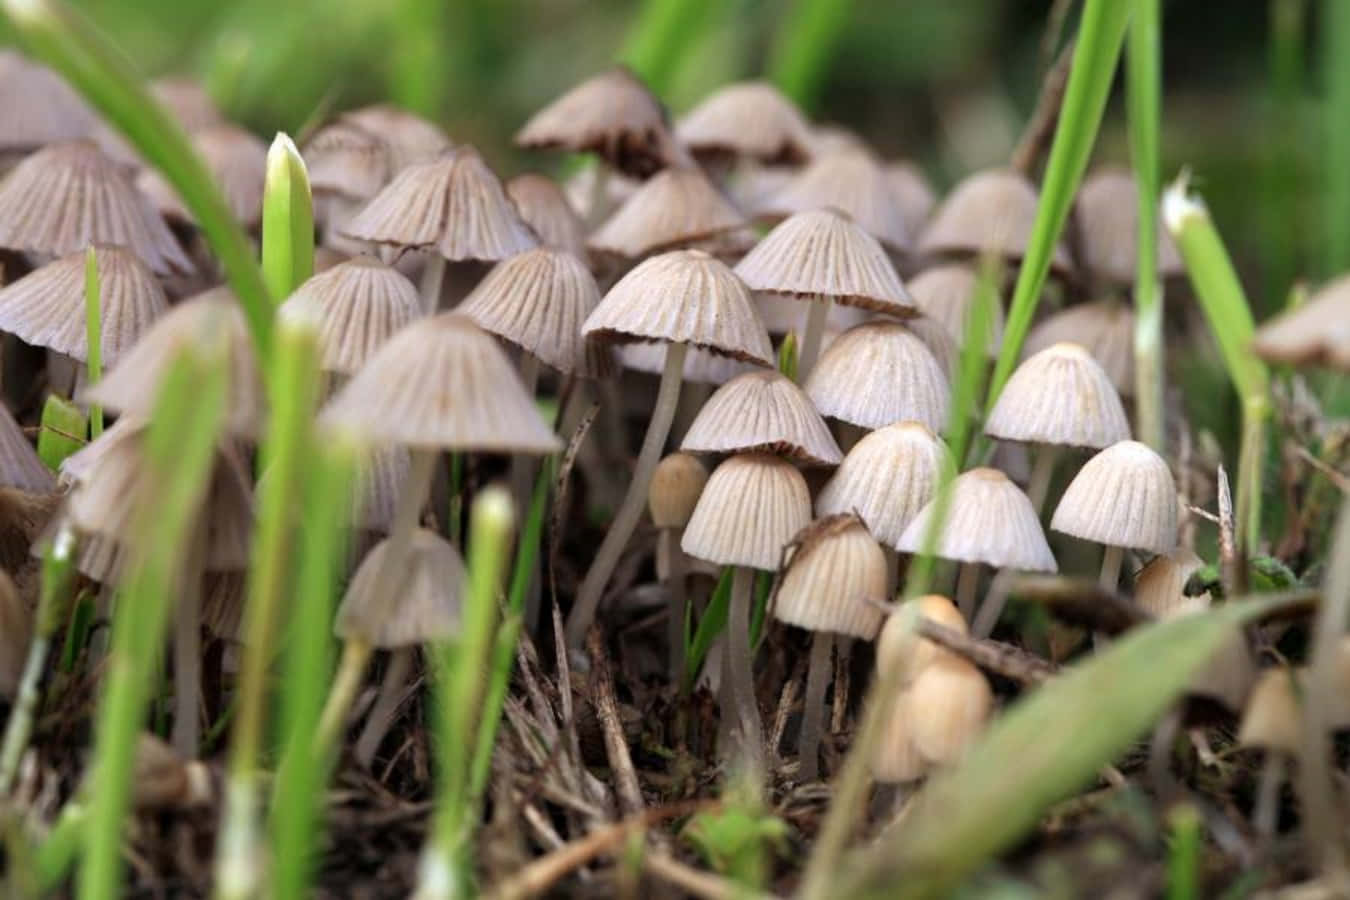 Behold the beauty of a Magic Mushroom